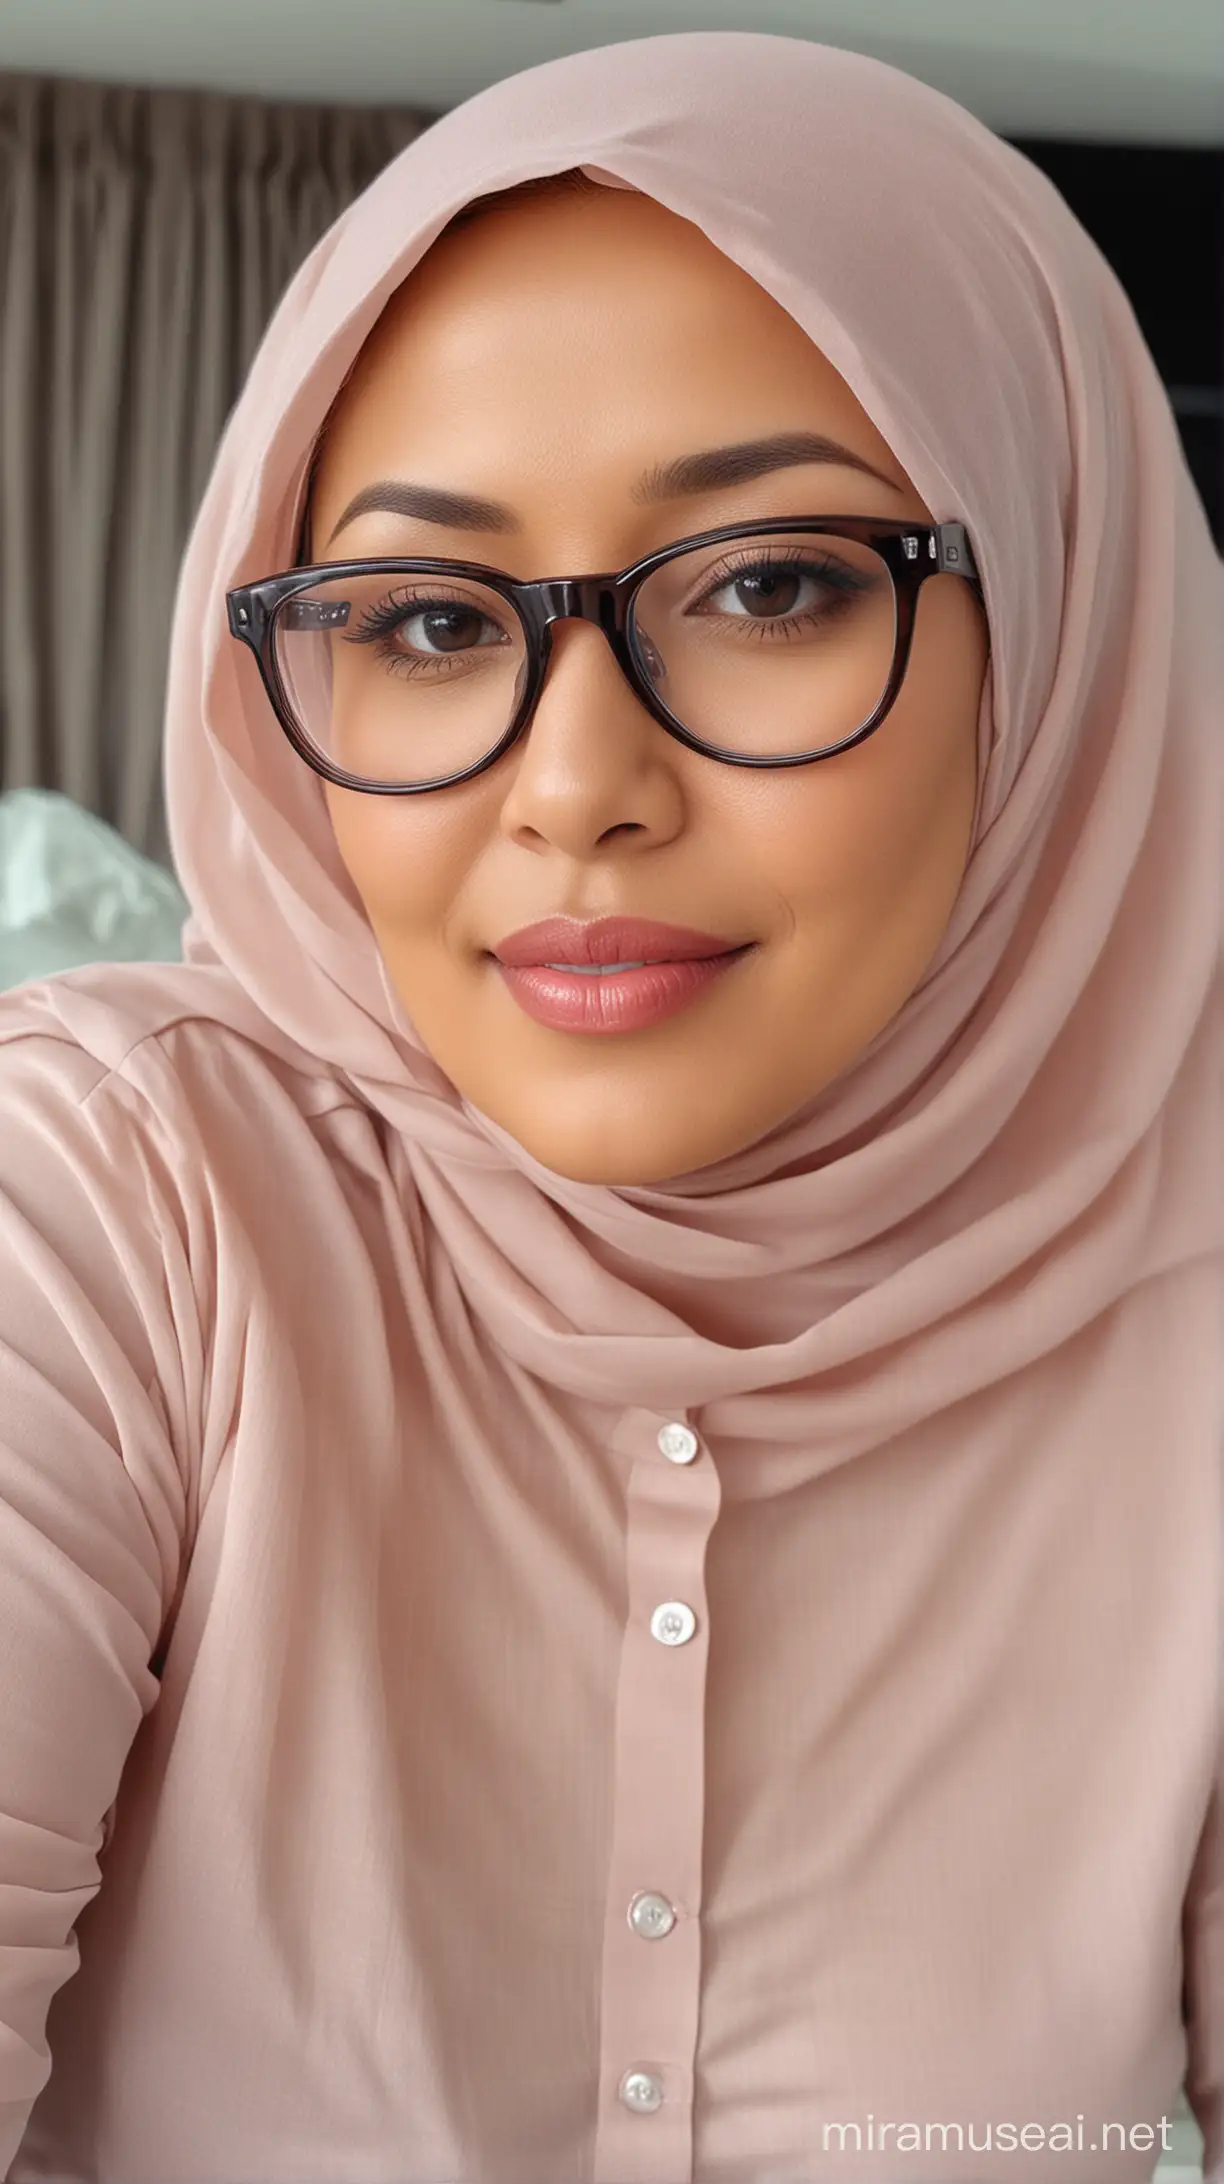 46 years old woman, Indonesian hijab, beautiful face, sensual, wearing transparant shirt, glasses, super big size breast, big butt, full body detiles, perfect body.